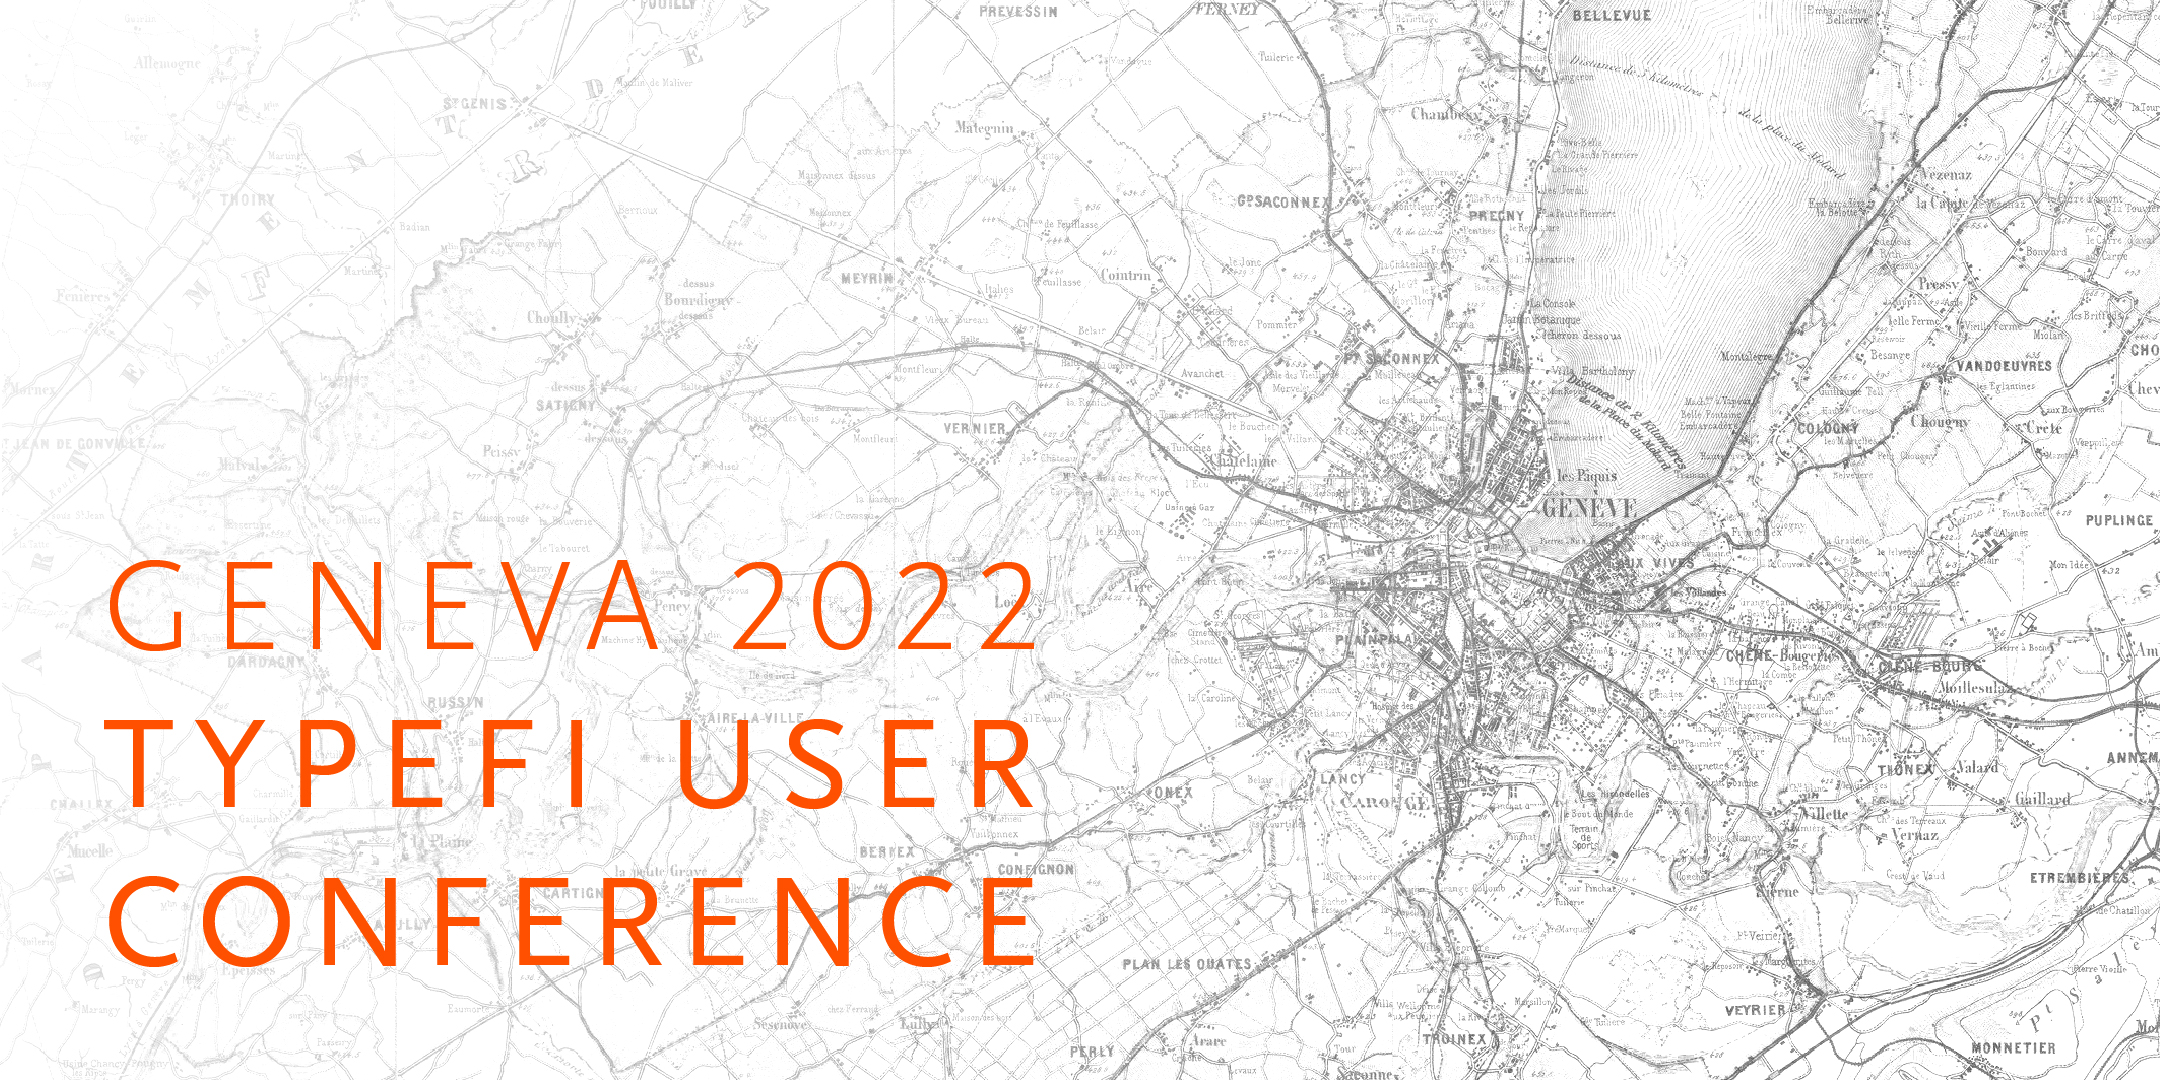 Geneva 2022 Typefi User Conference